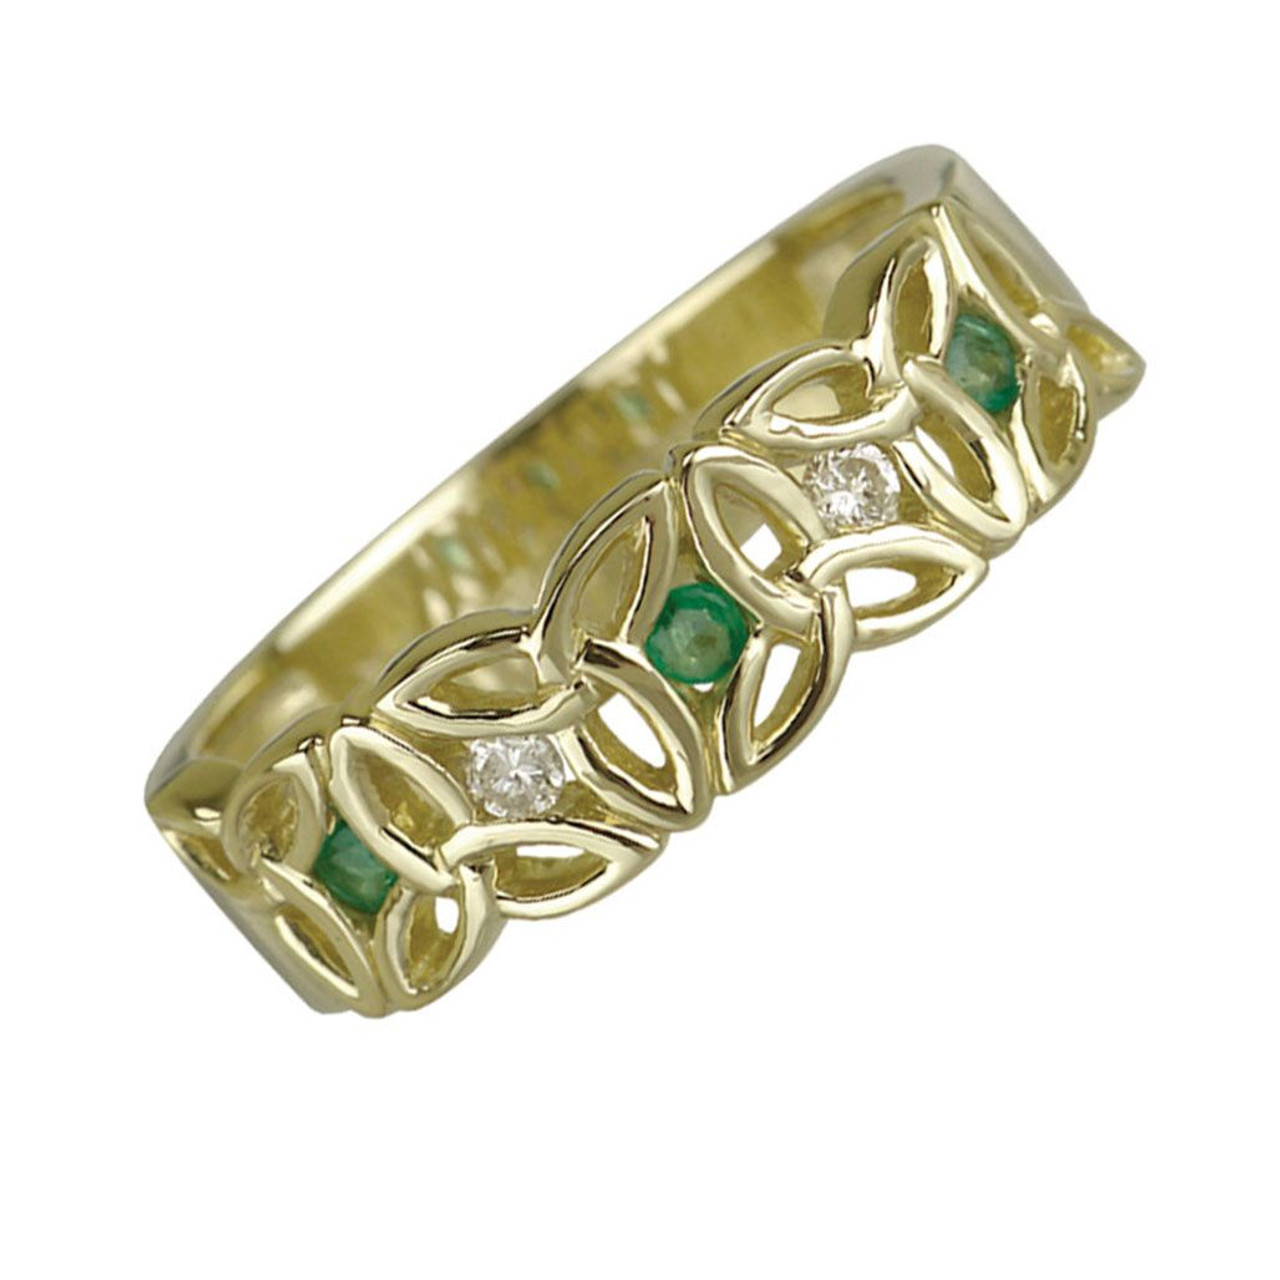 Irish-Made 10k trinity Knot Ring